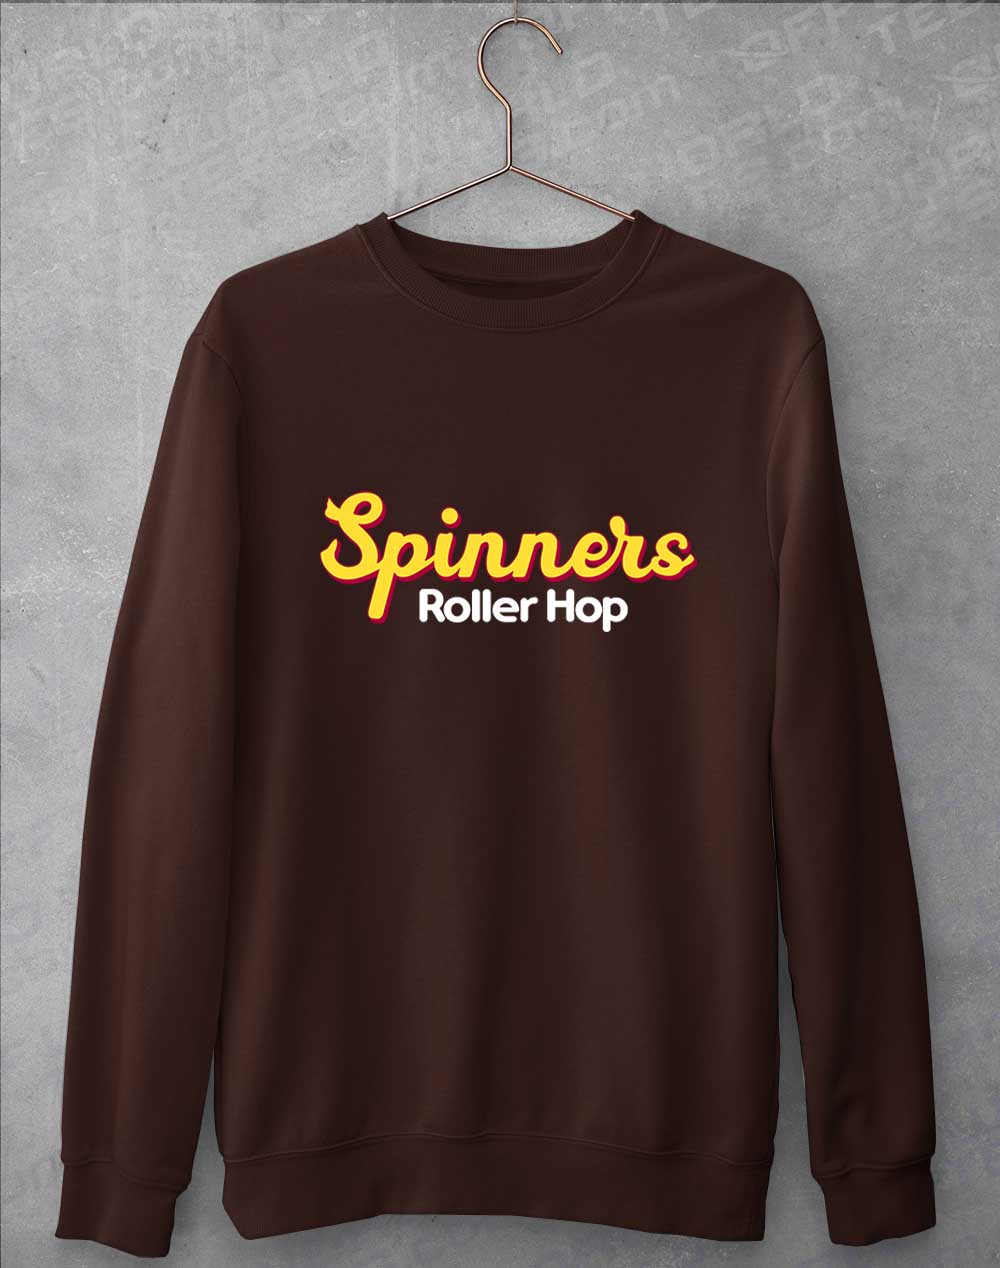 Hot Chocolate - Spinners Roller Hop Sweatshirt